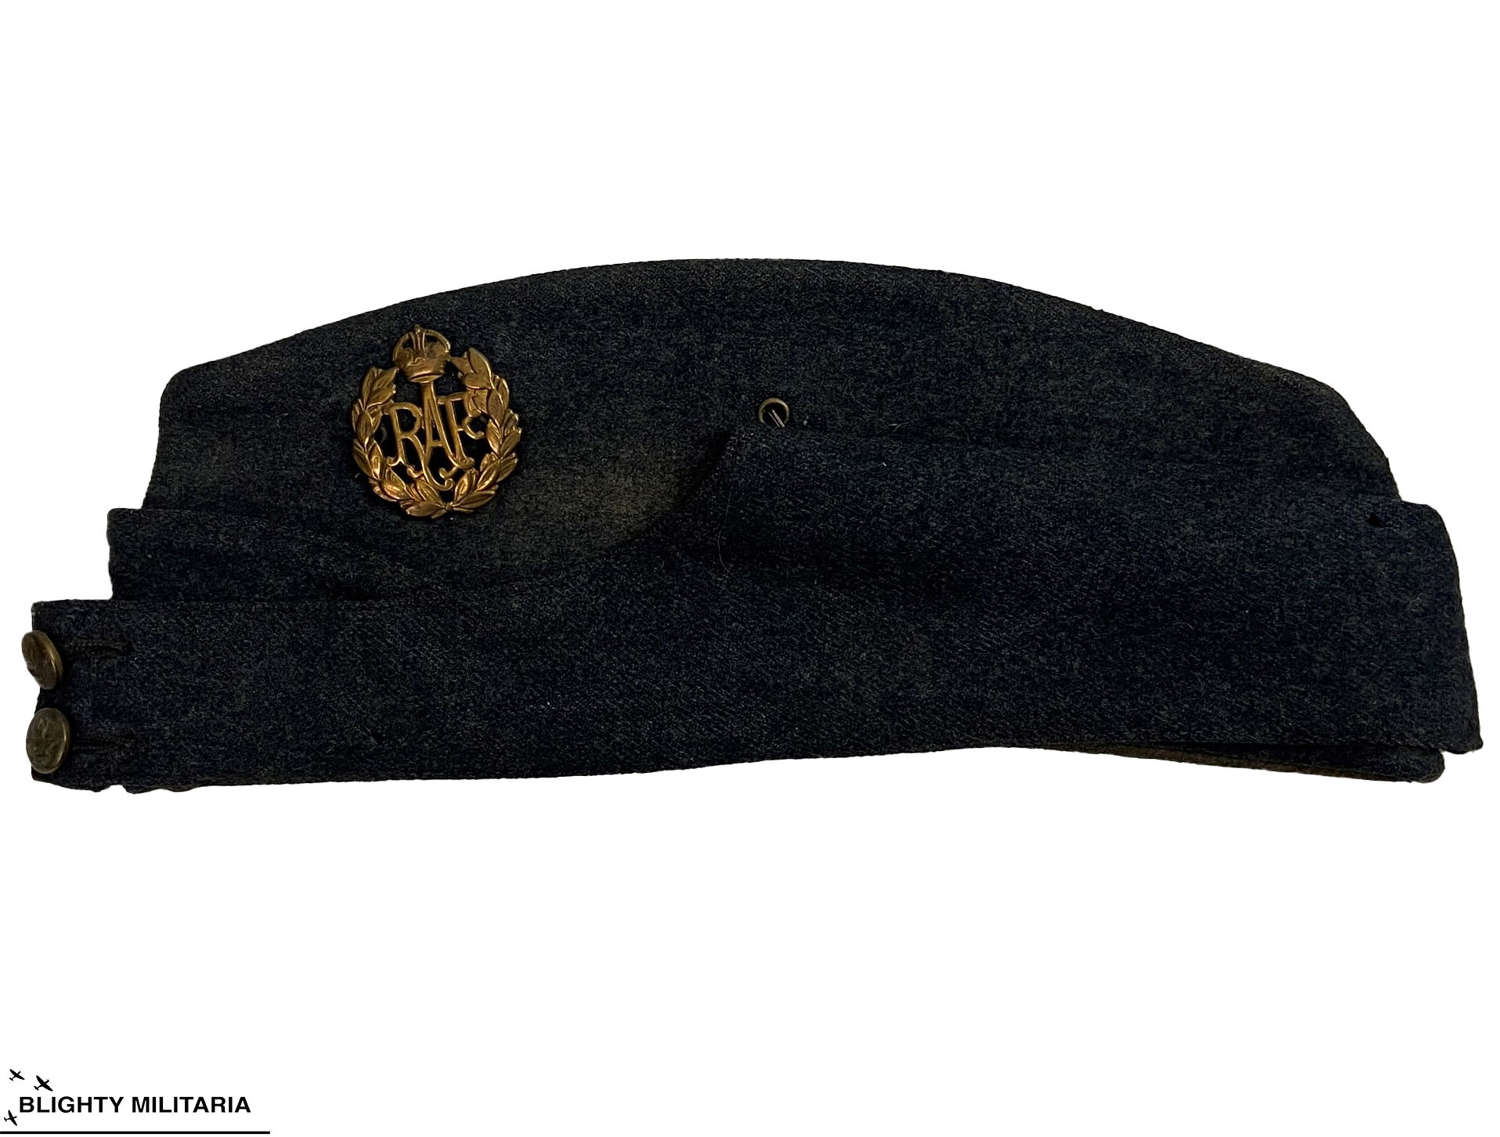 Original WW2 RAF Ordinary Airman's Forage cap - Size 7 1/8